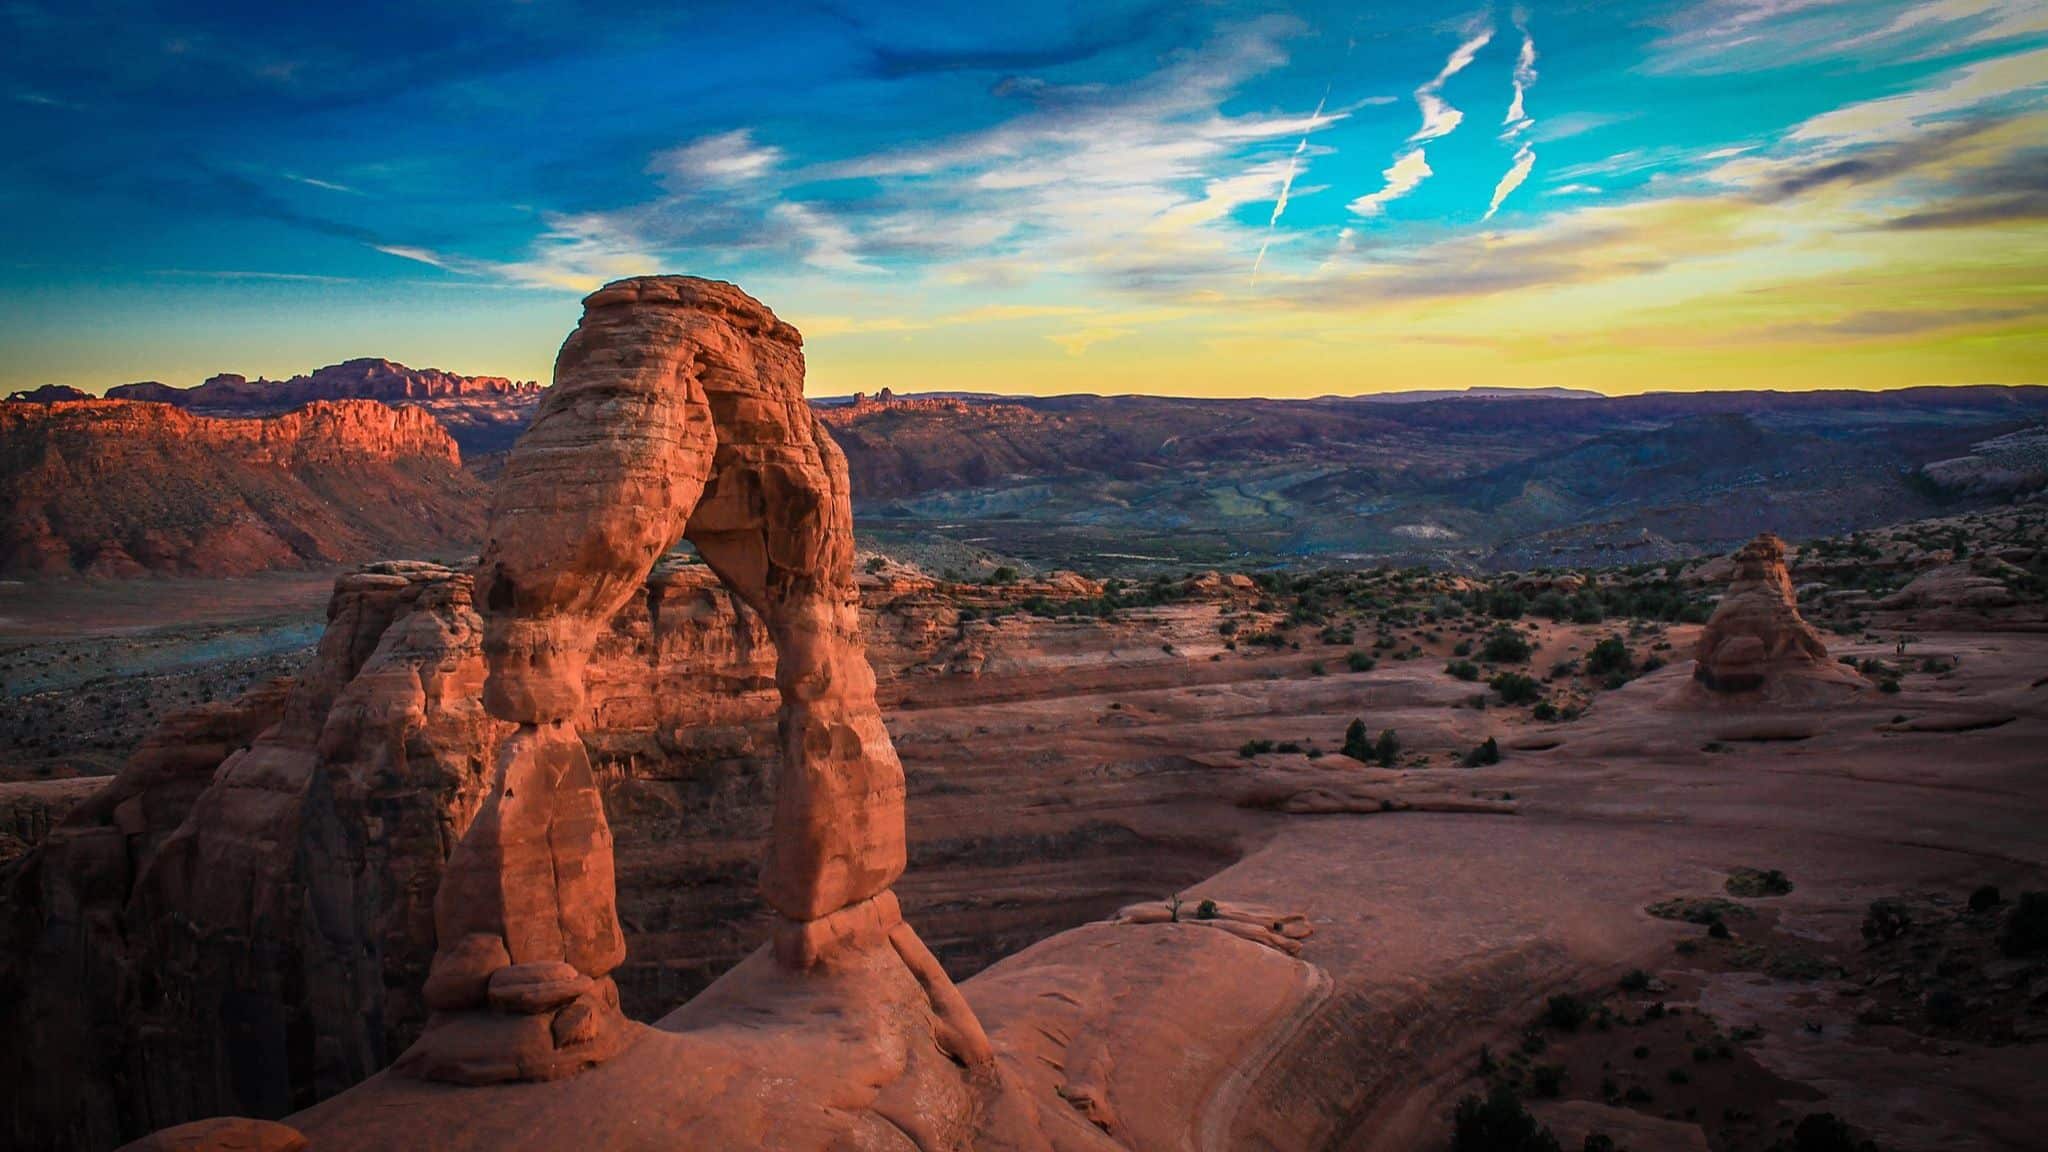 Rocks and desertscape in Moab Arizona